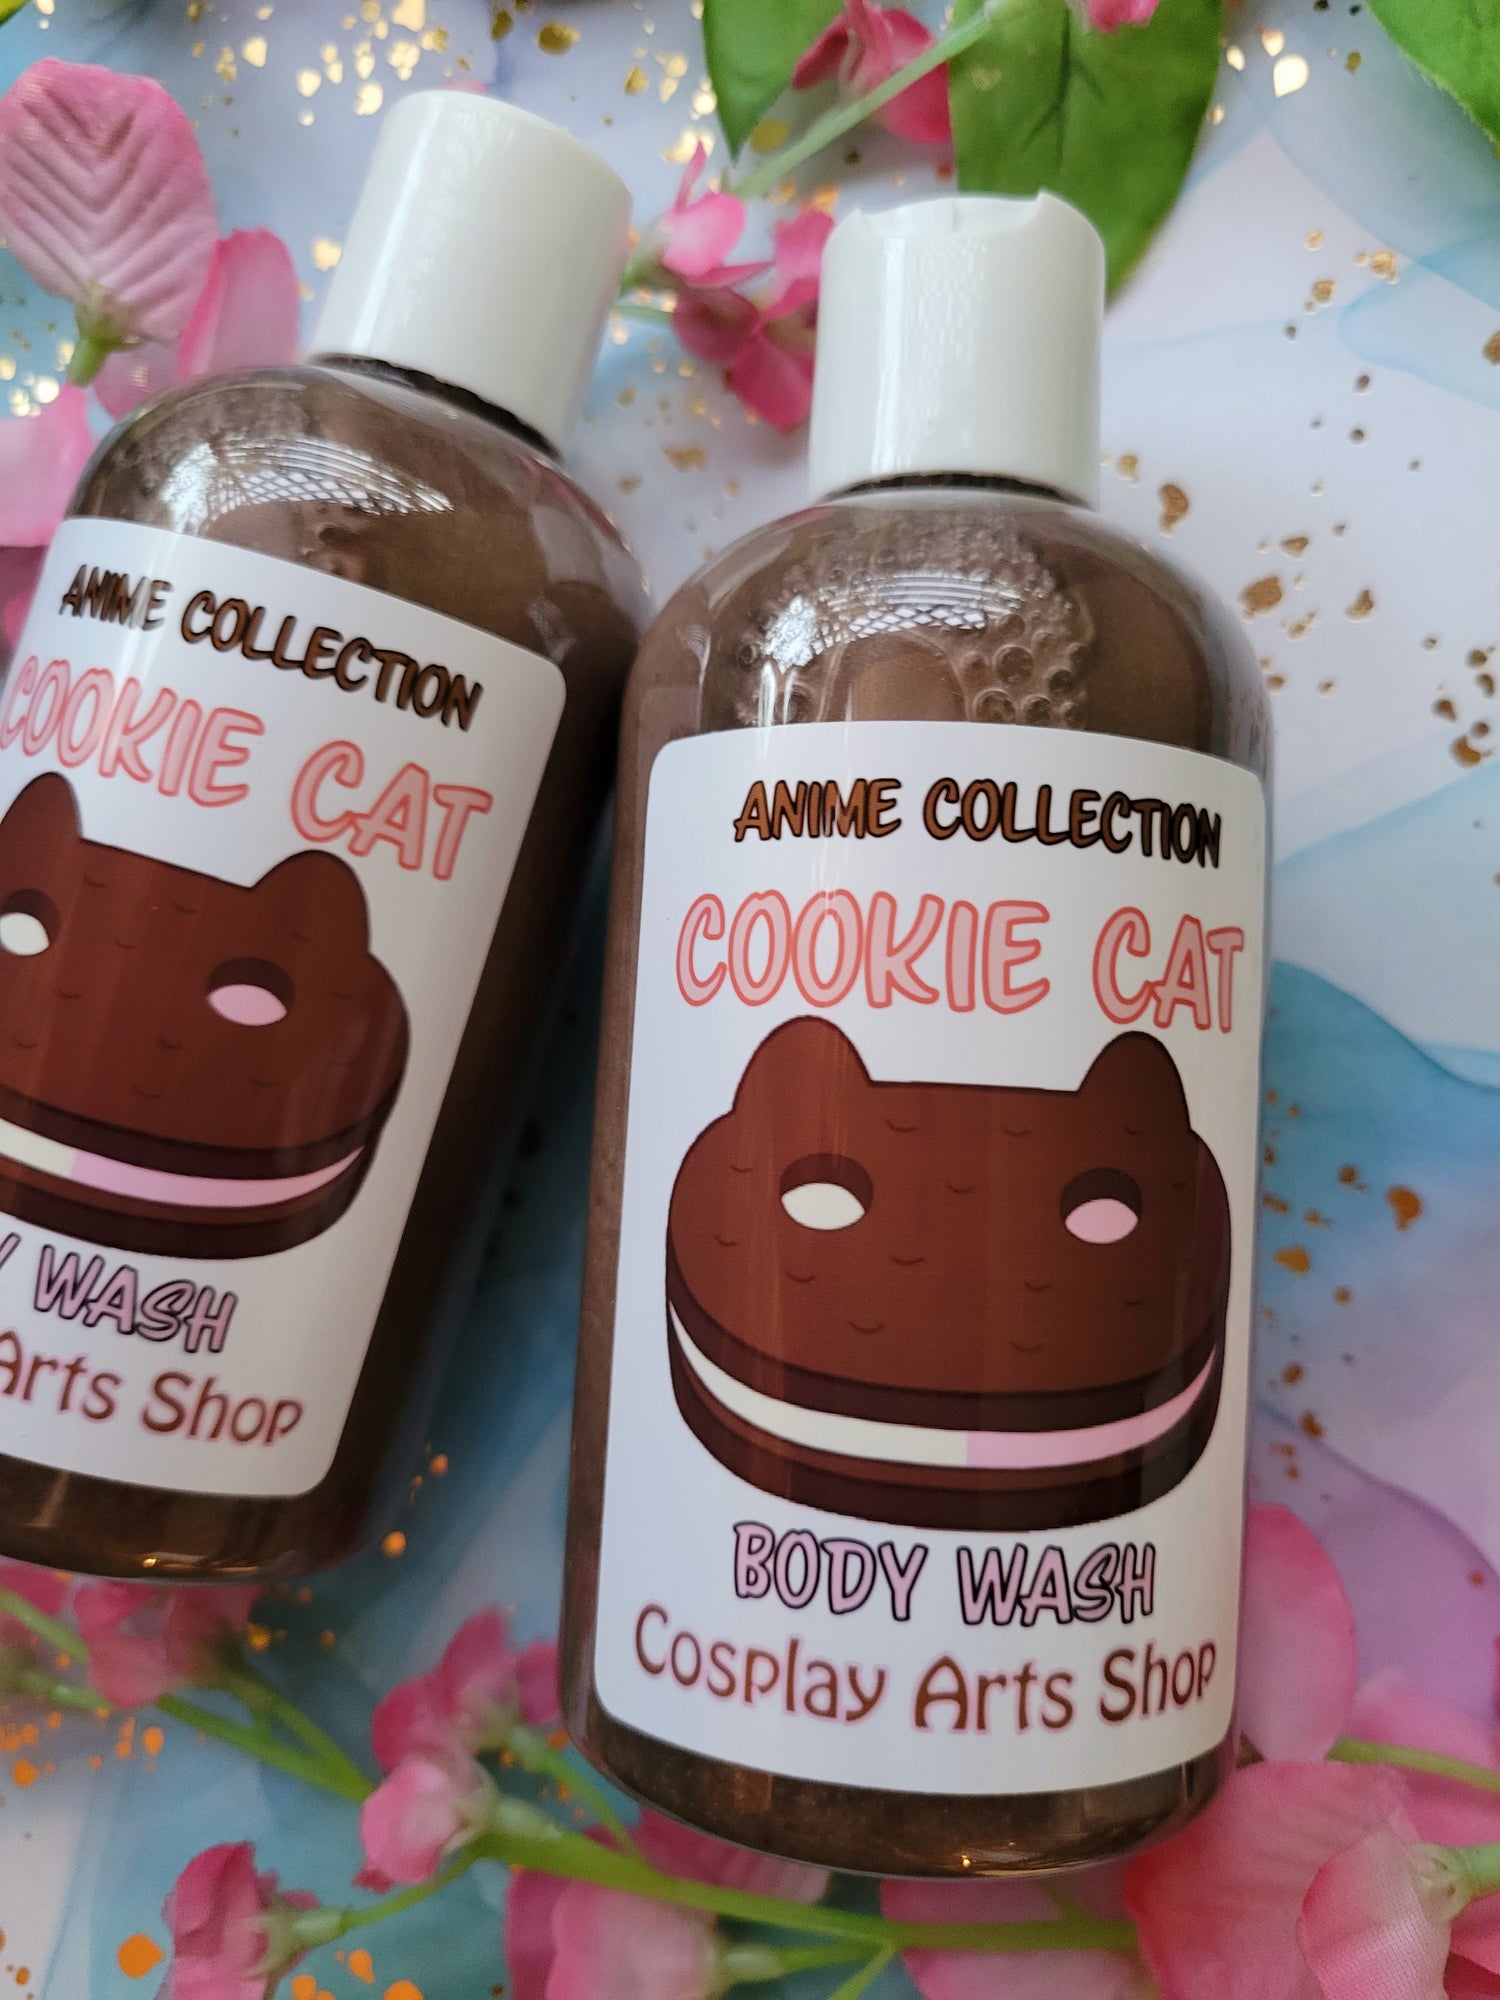 Cookie Cat Body Wash - Cosplay Arts Shop